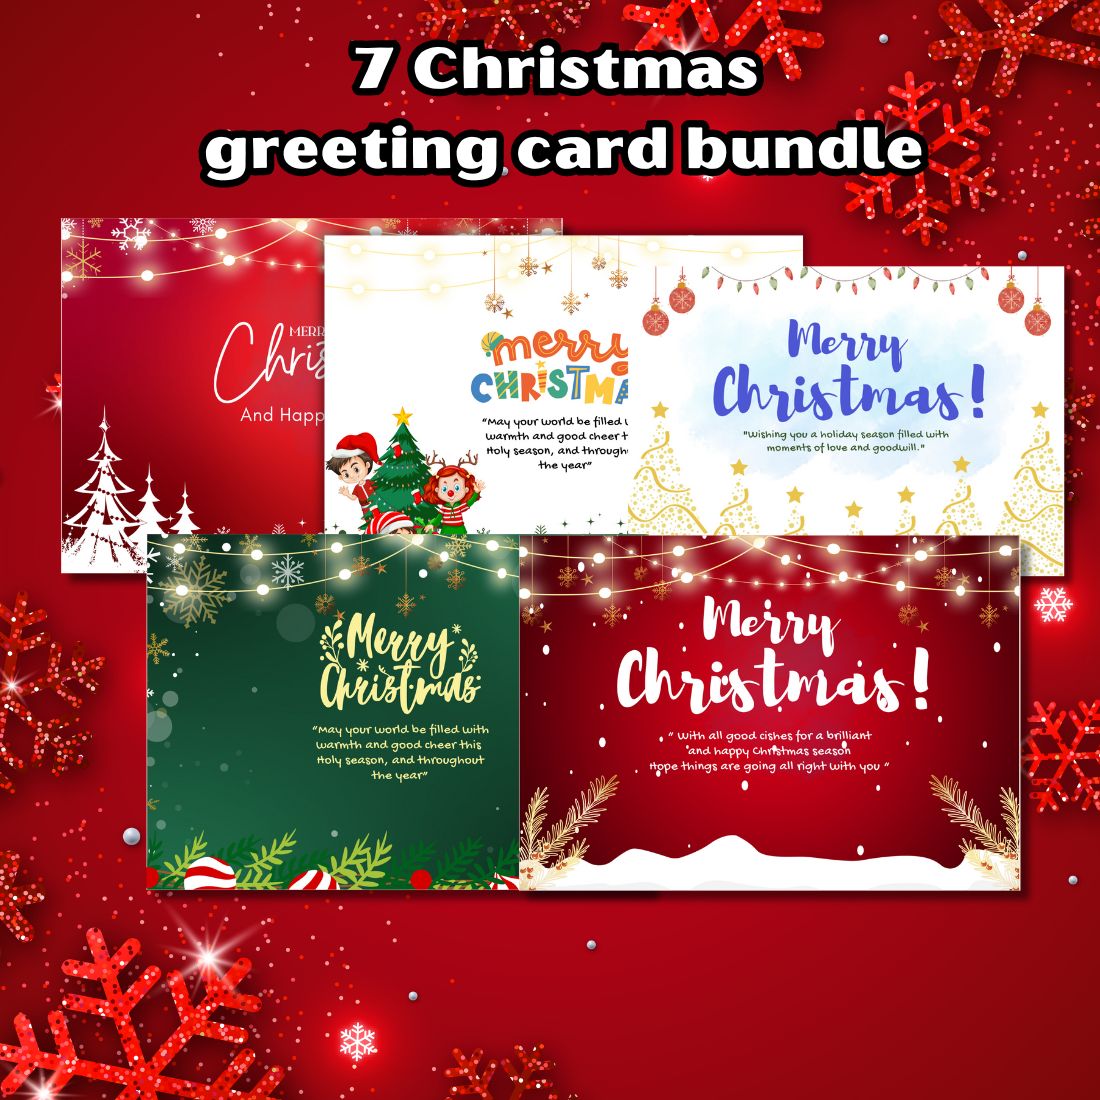 7 Christmas Greeting Card Bundle cover image.